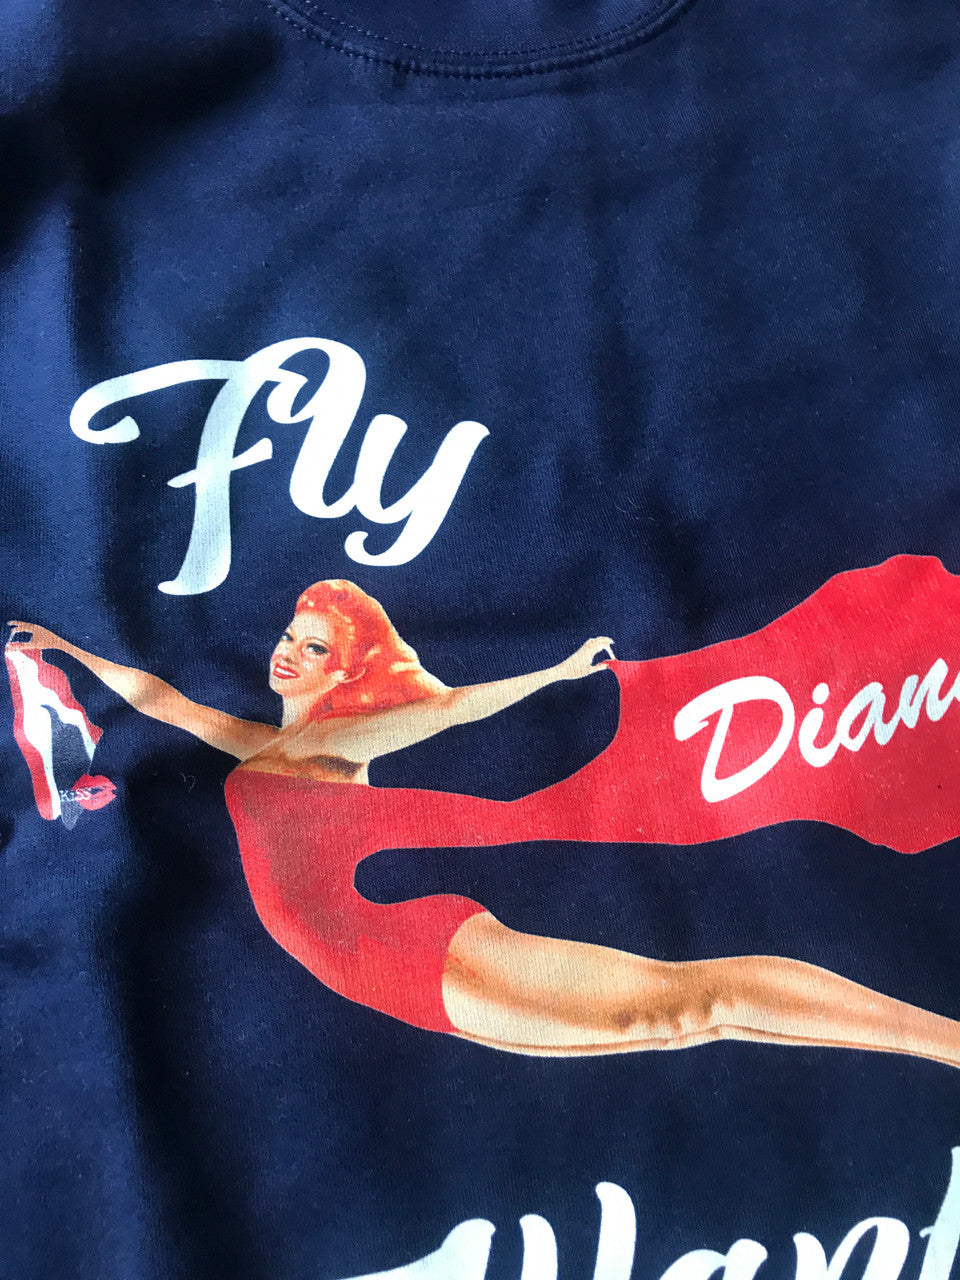 Fly Atlantic KiSS Sweatshirt - Diana - Princess of Wales inspired - Gym Workout Paparazzi - Virgin Airline Pin Up girl